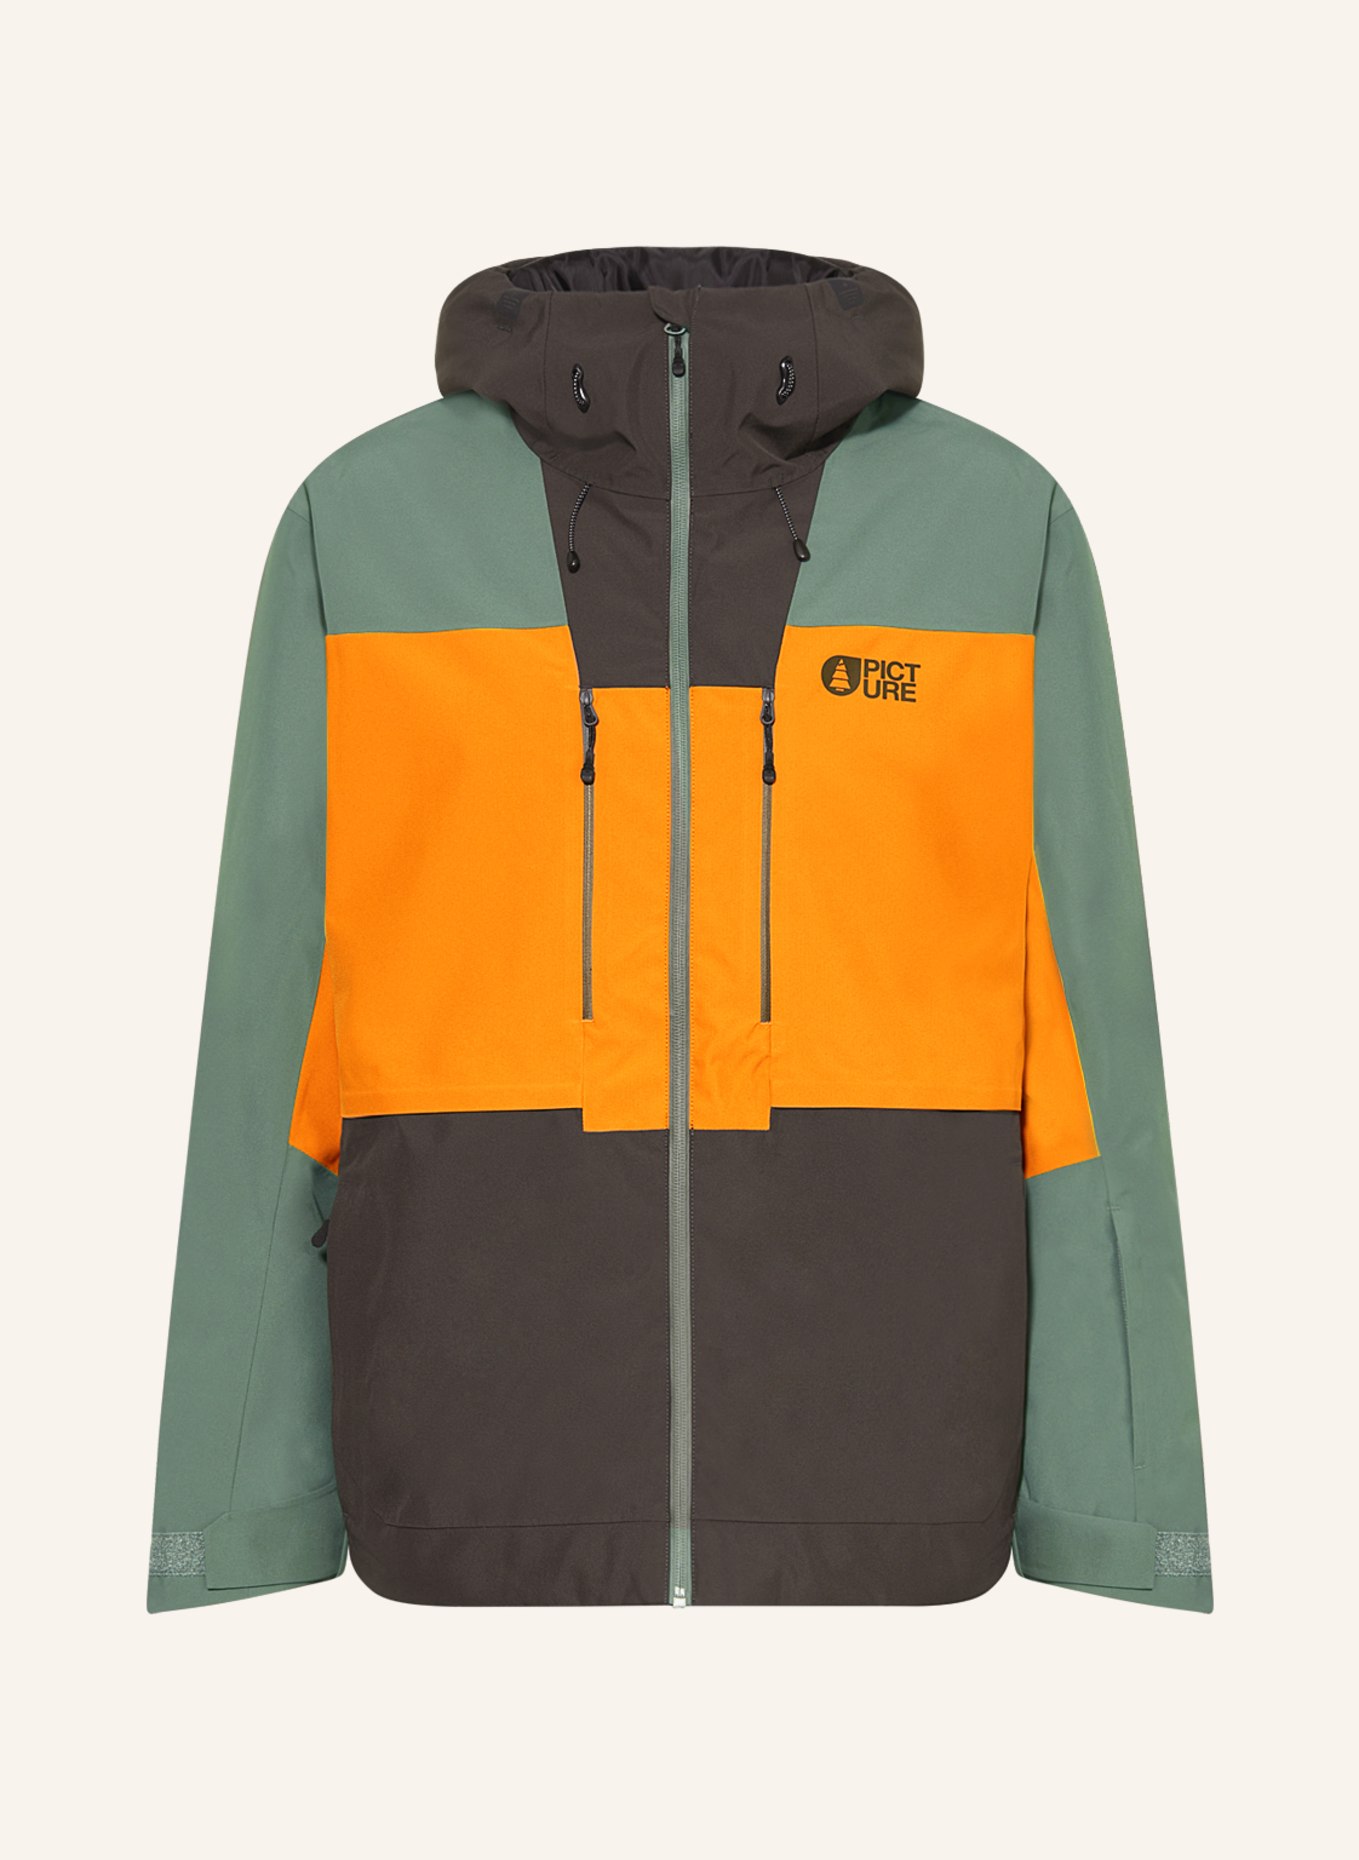 OBJECT oliv/ PICTURE Skijacke dunkelgrau in orange/